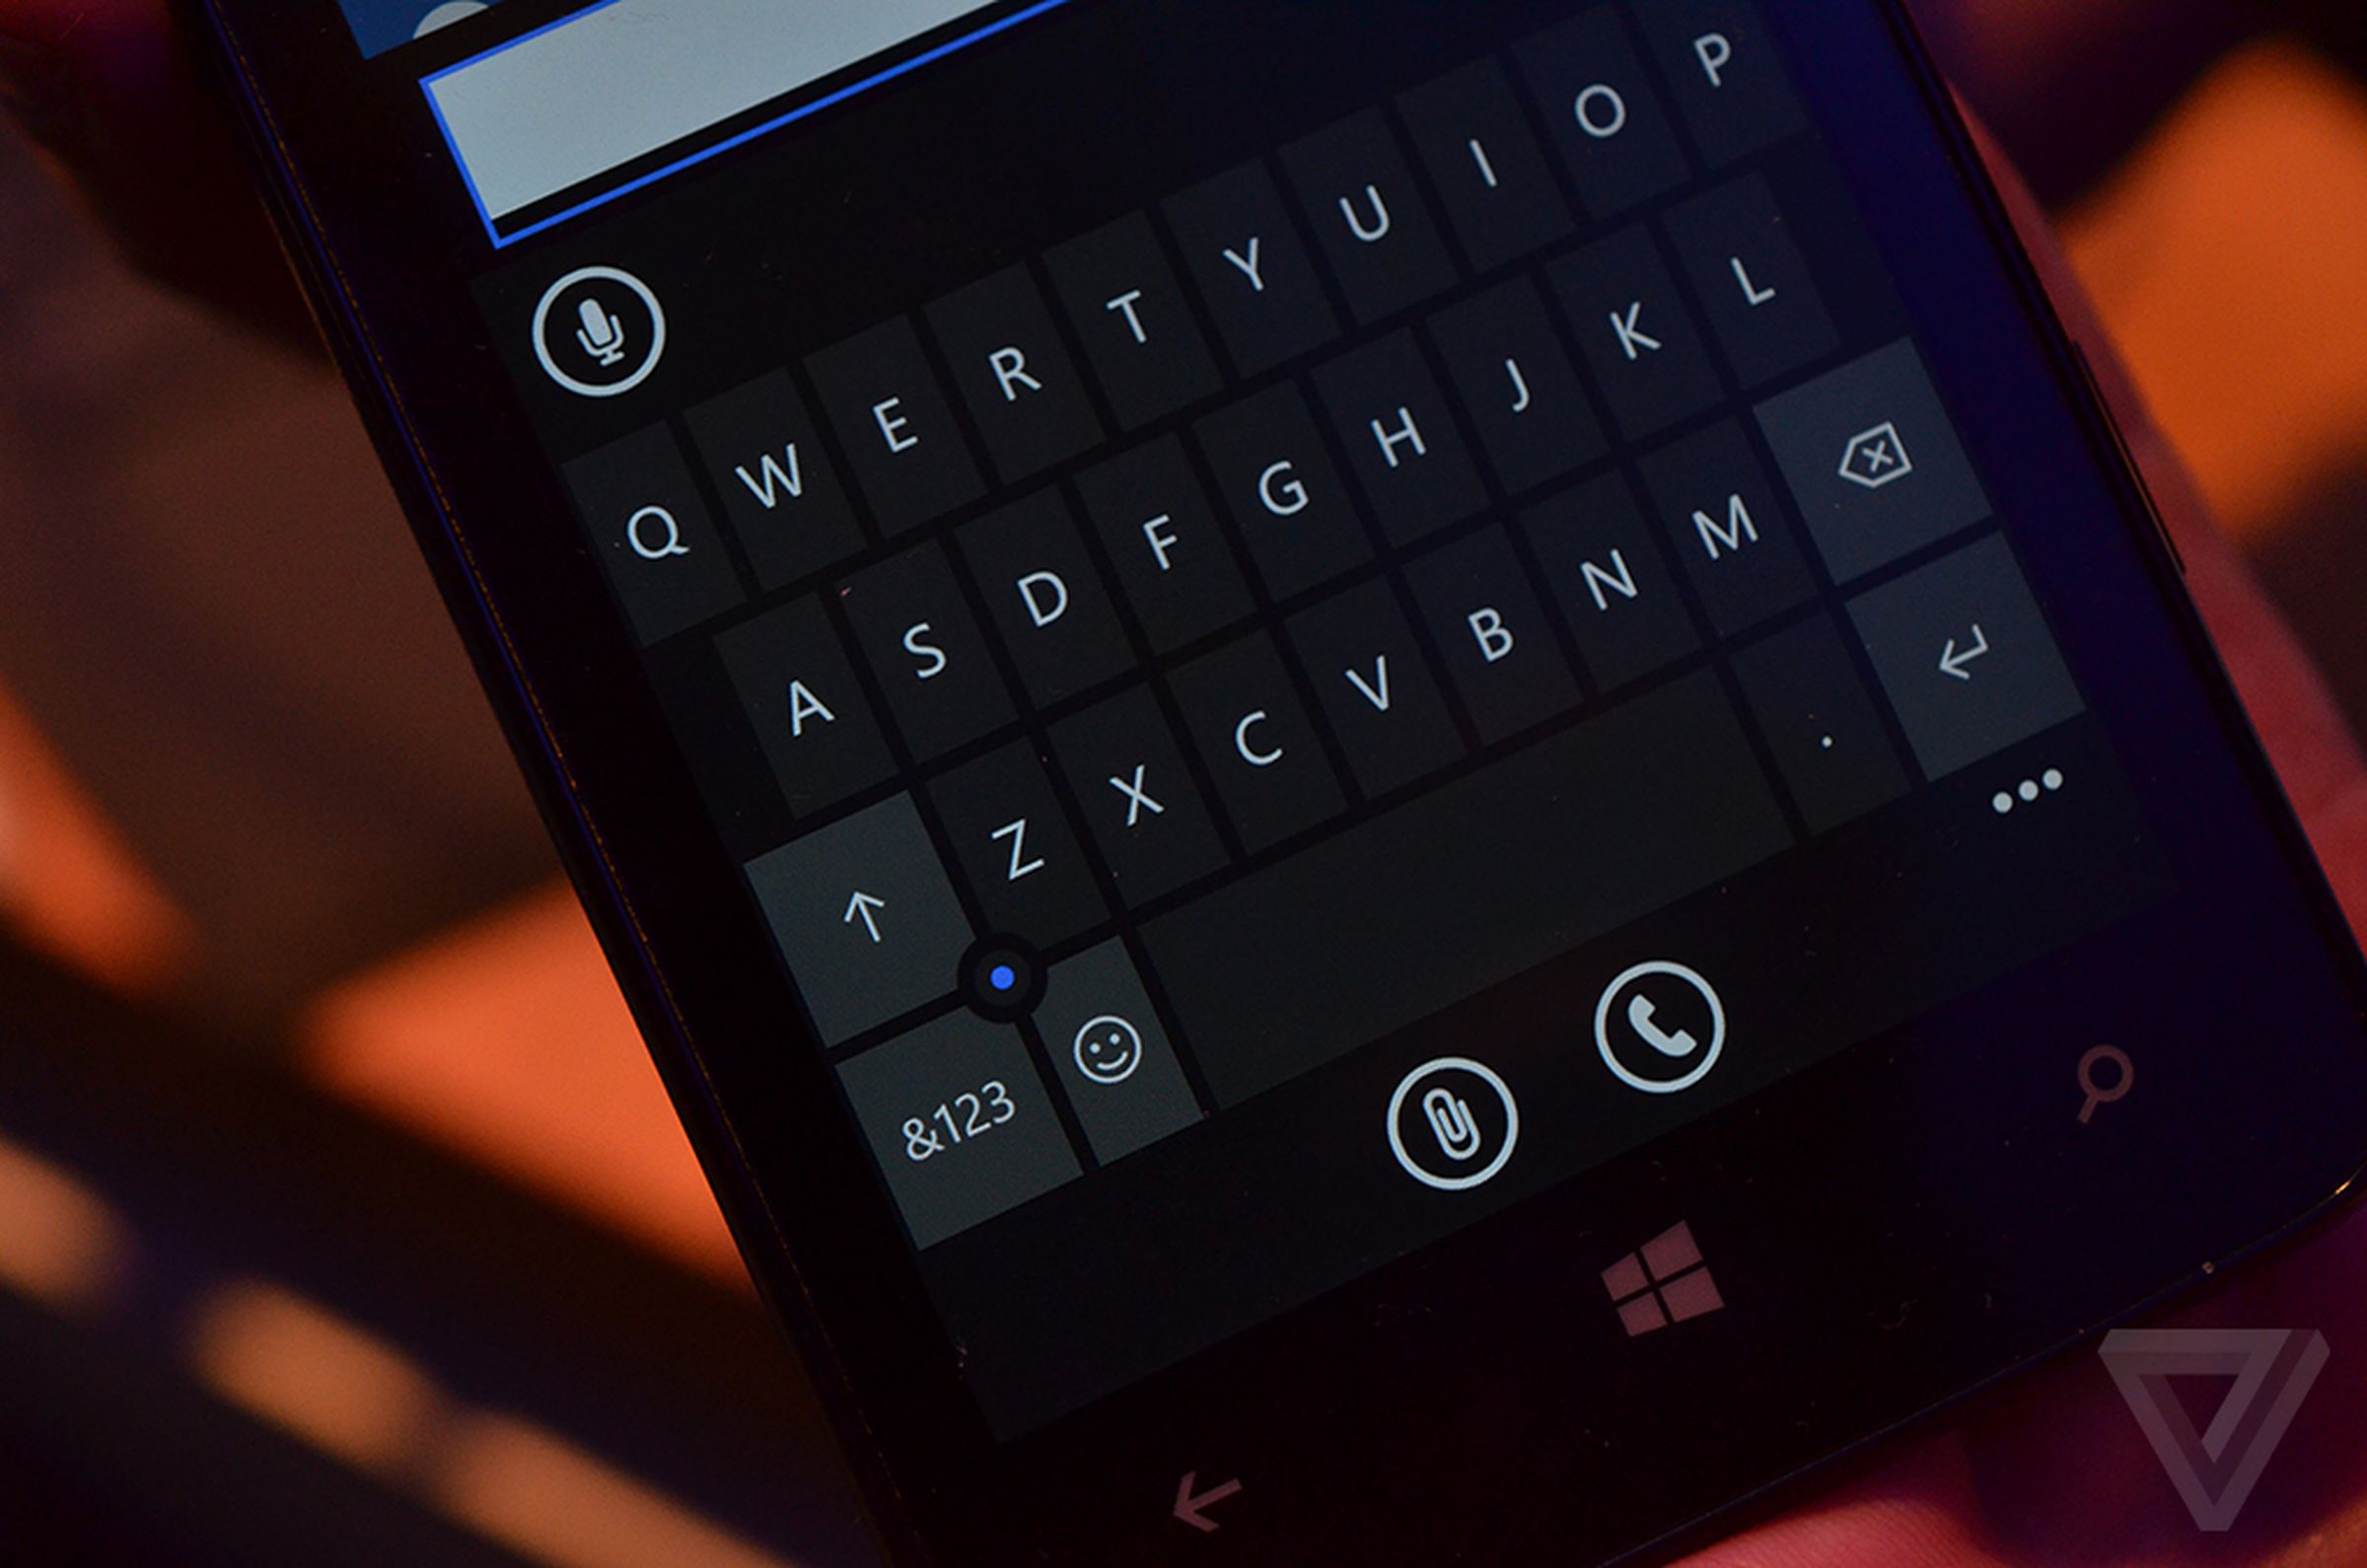 Windows 10 on phones hands-on